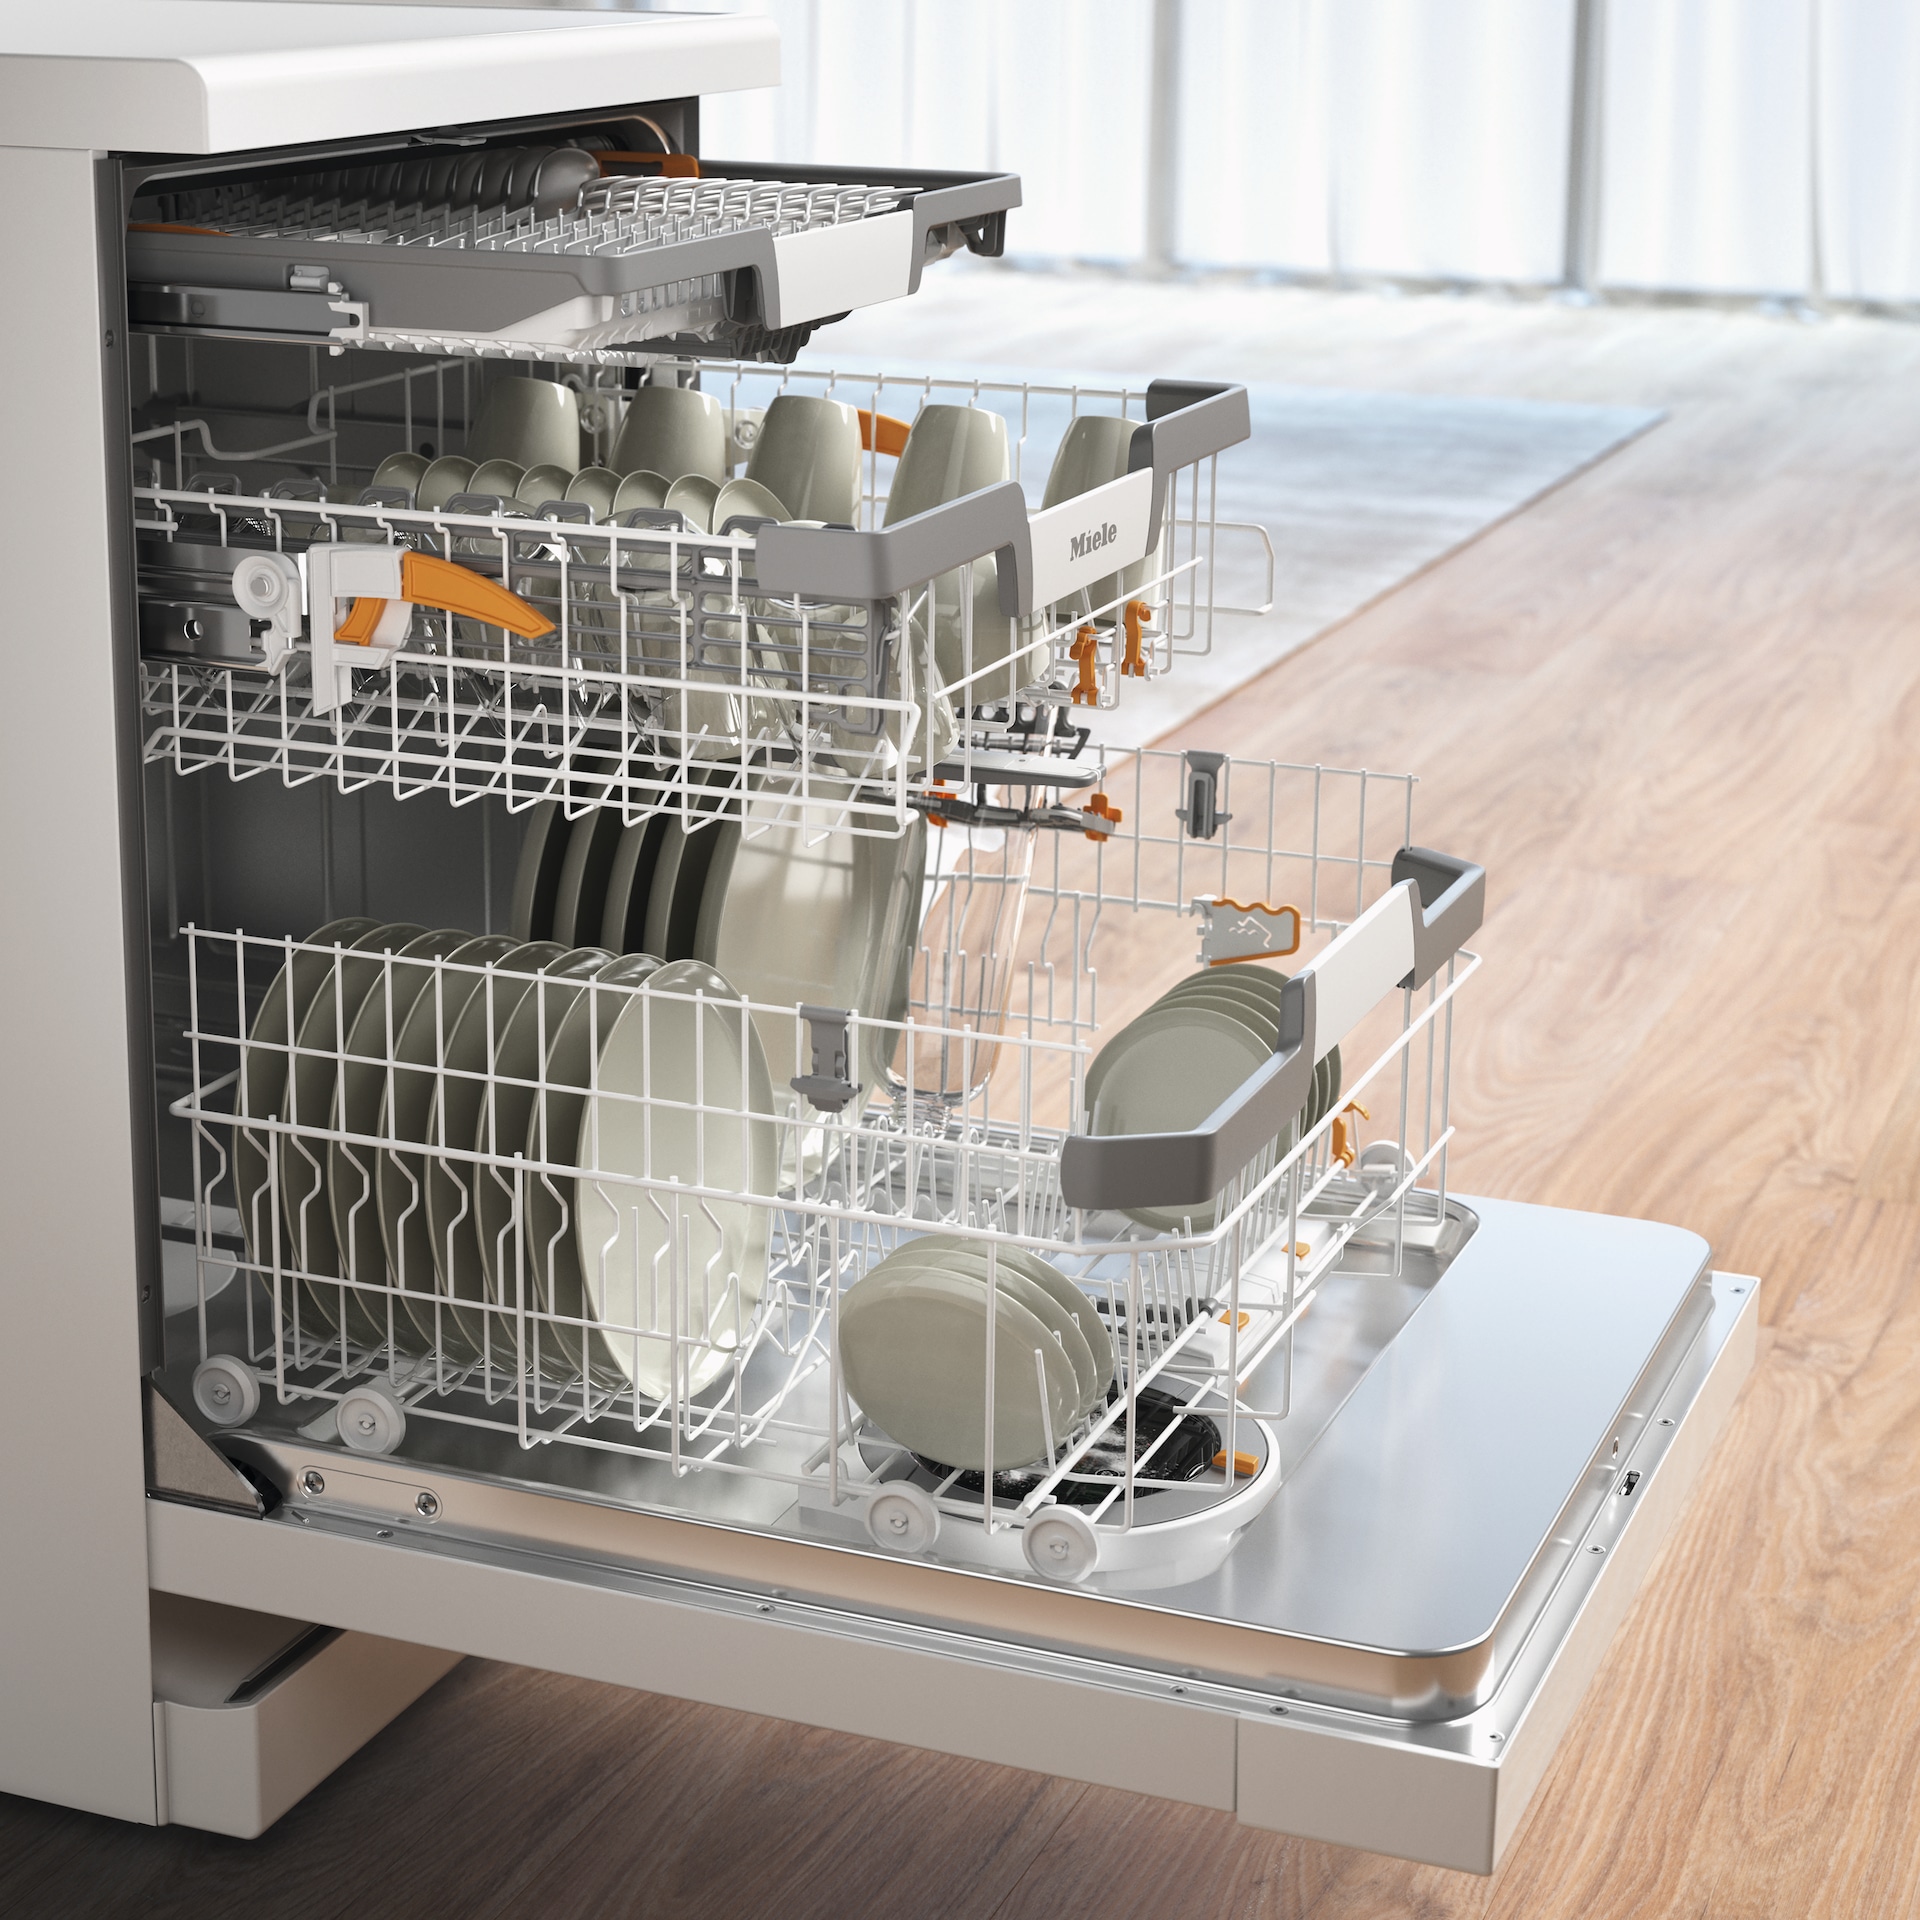 Dishwashers - G 7600 SC AutoDos Brilliant White - 4